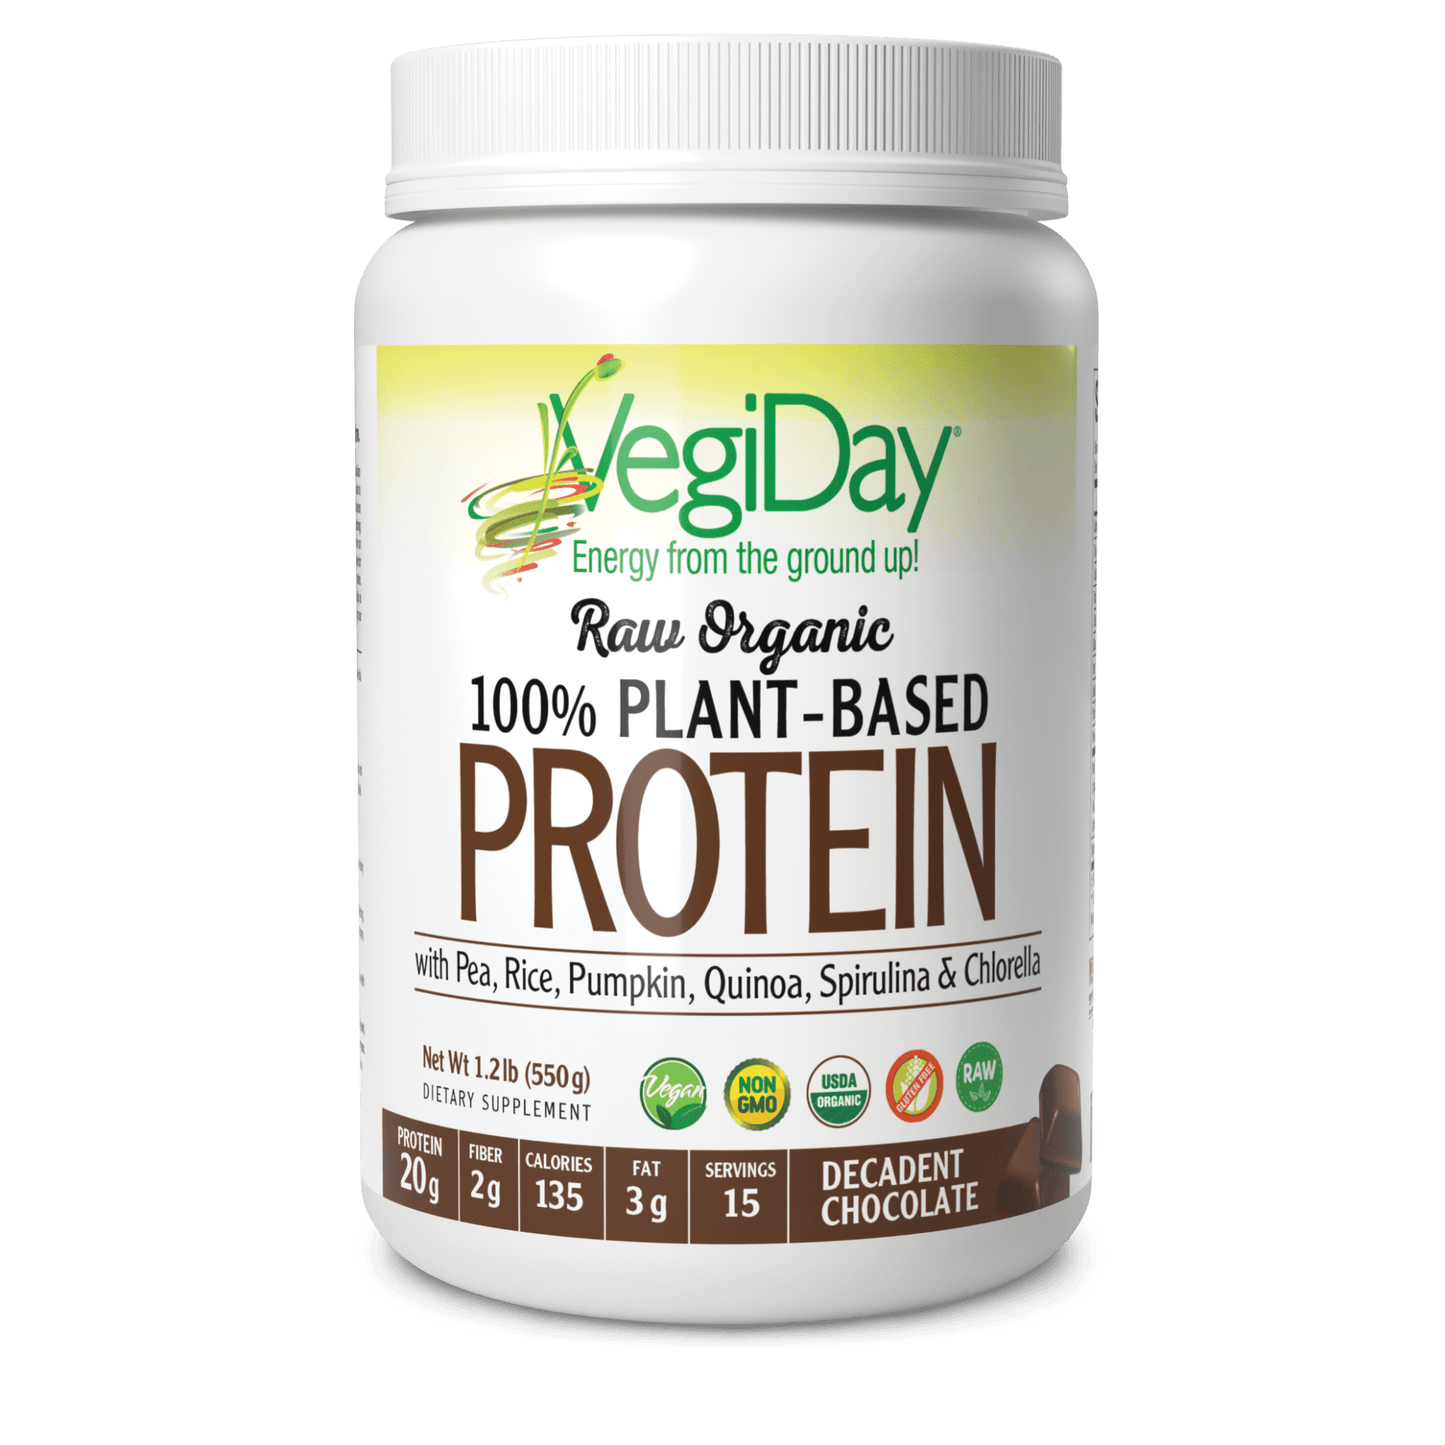 Raw Organic 100% Plant-Based Protein|variant|hi-res|2930U